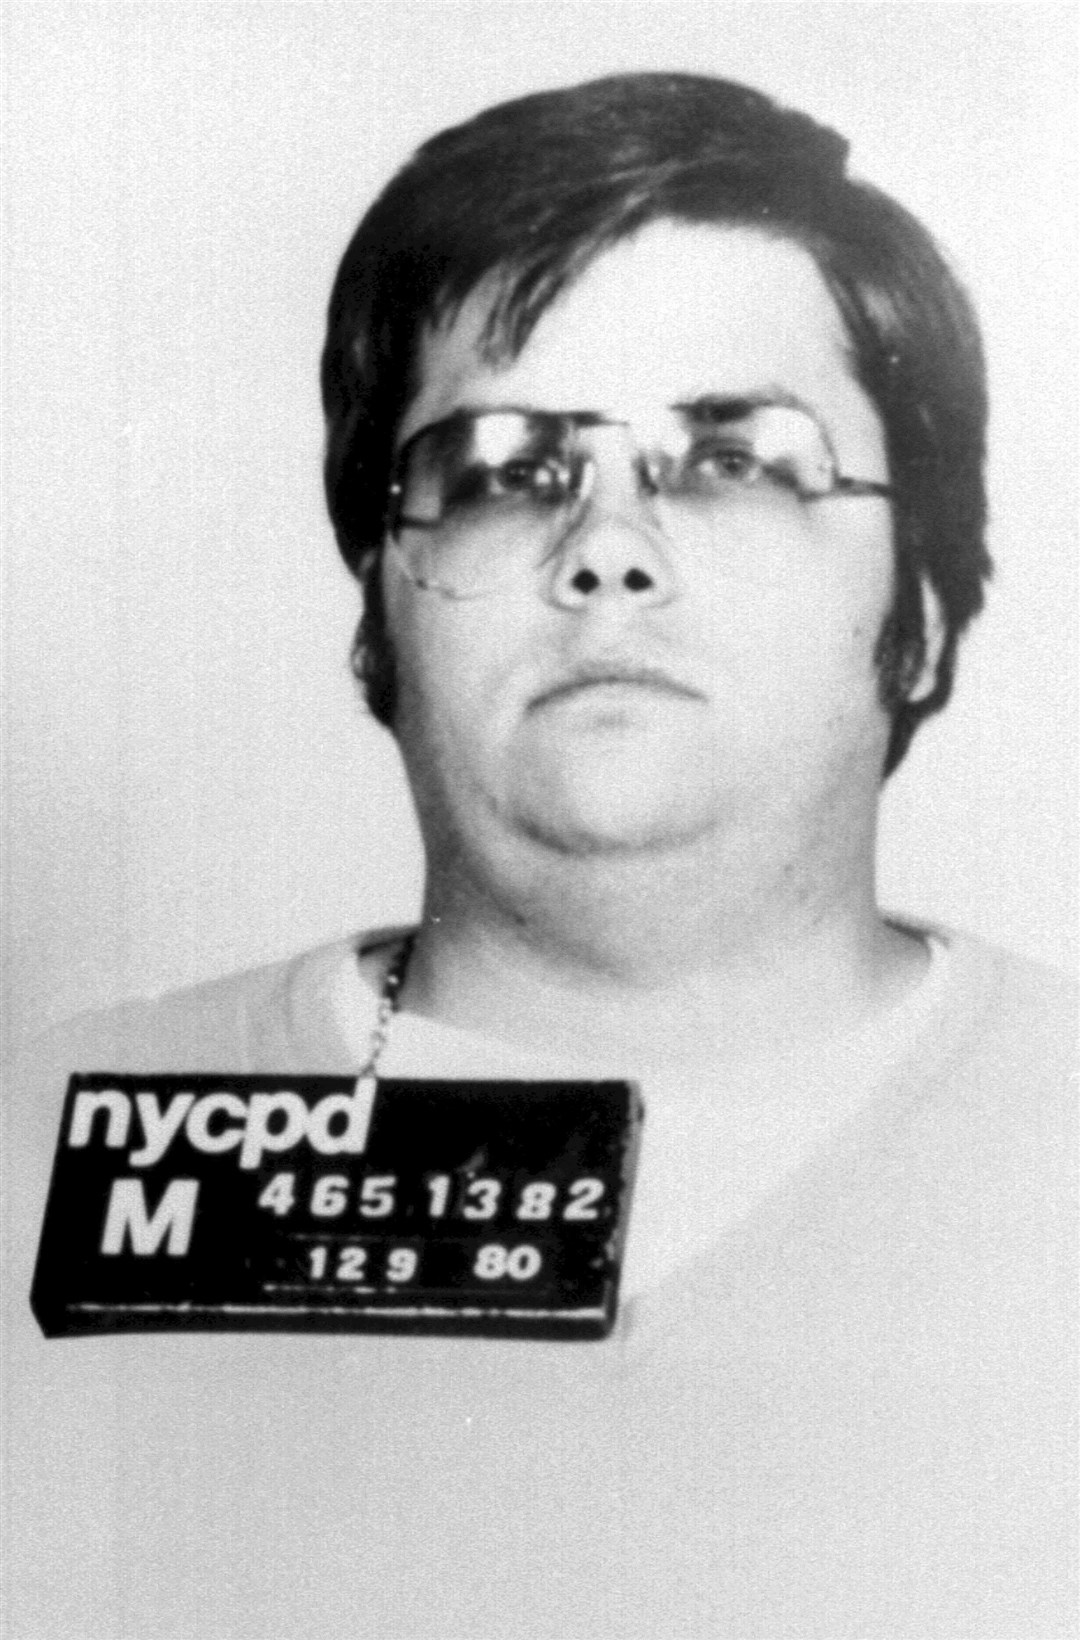 John Lennon’s killer, Mark David Chapman, has been denied parole for an 11th time (PA)